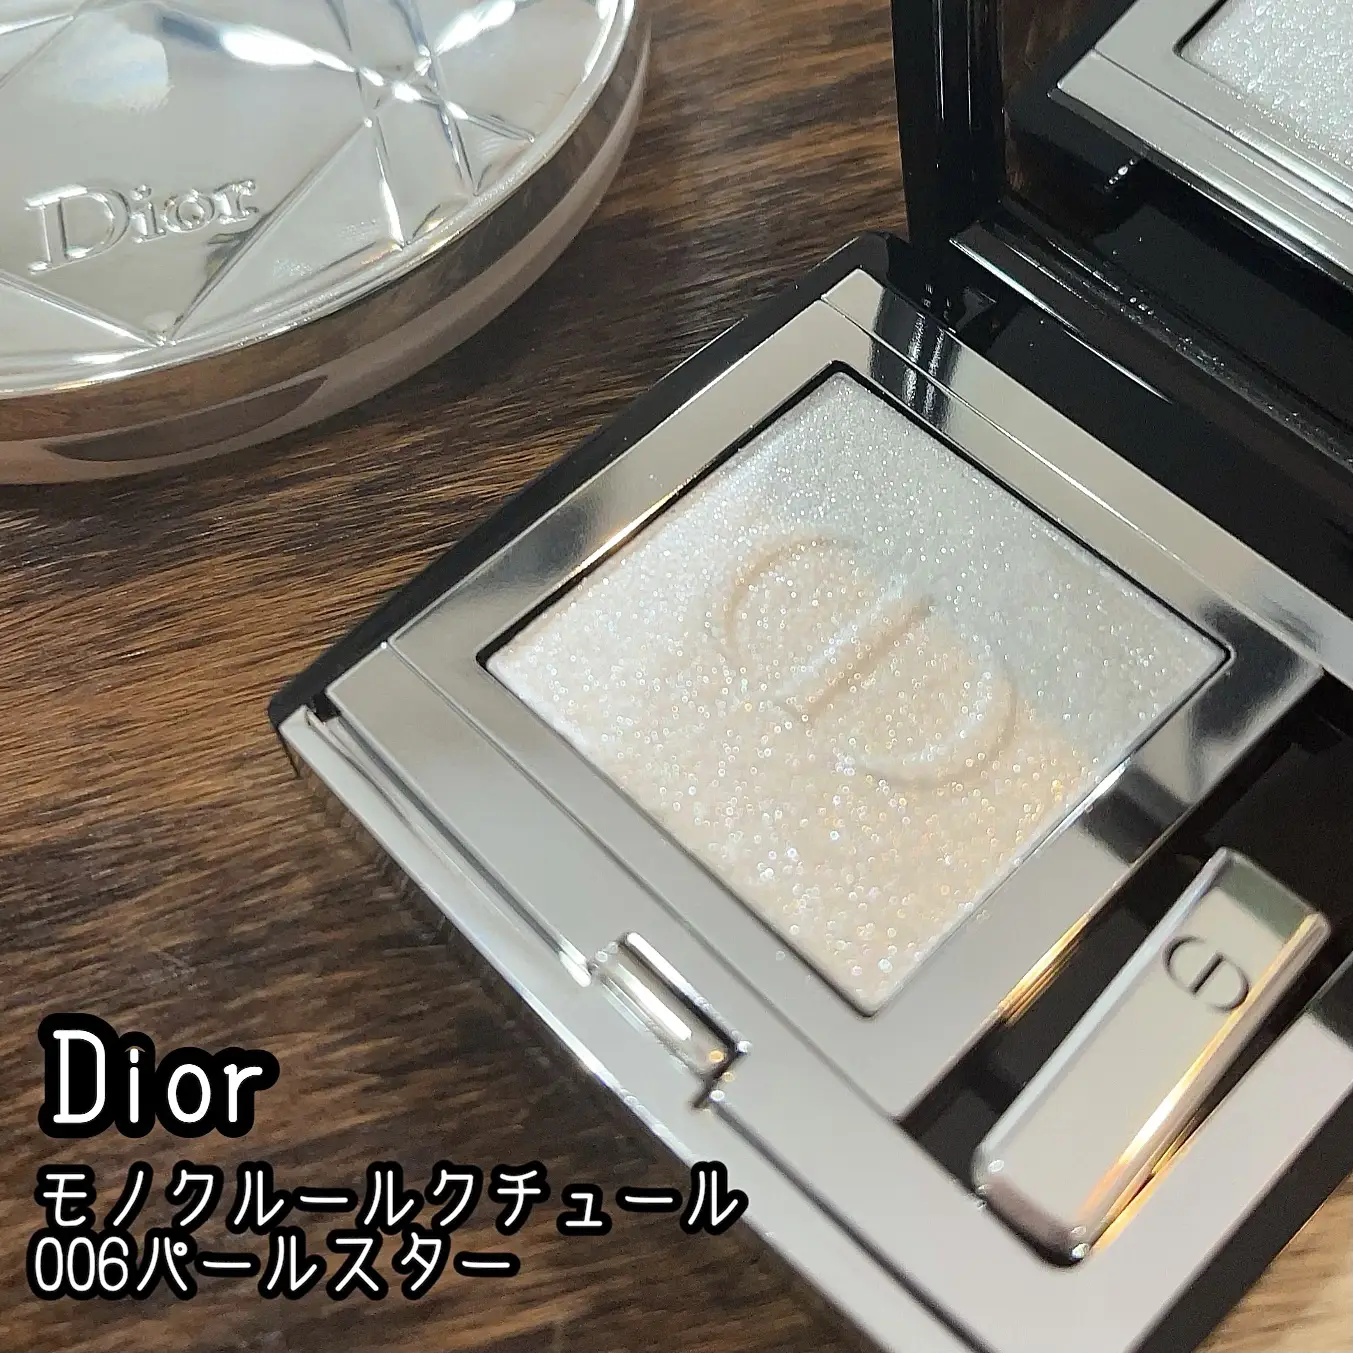 Dior モノクルールクチュール　006